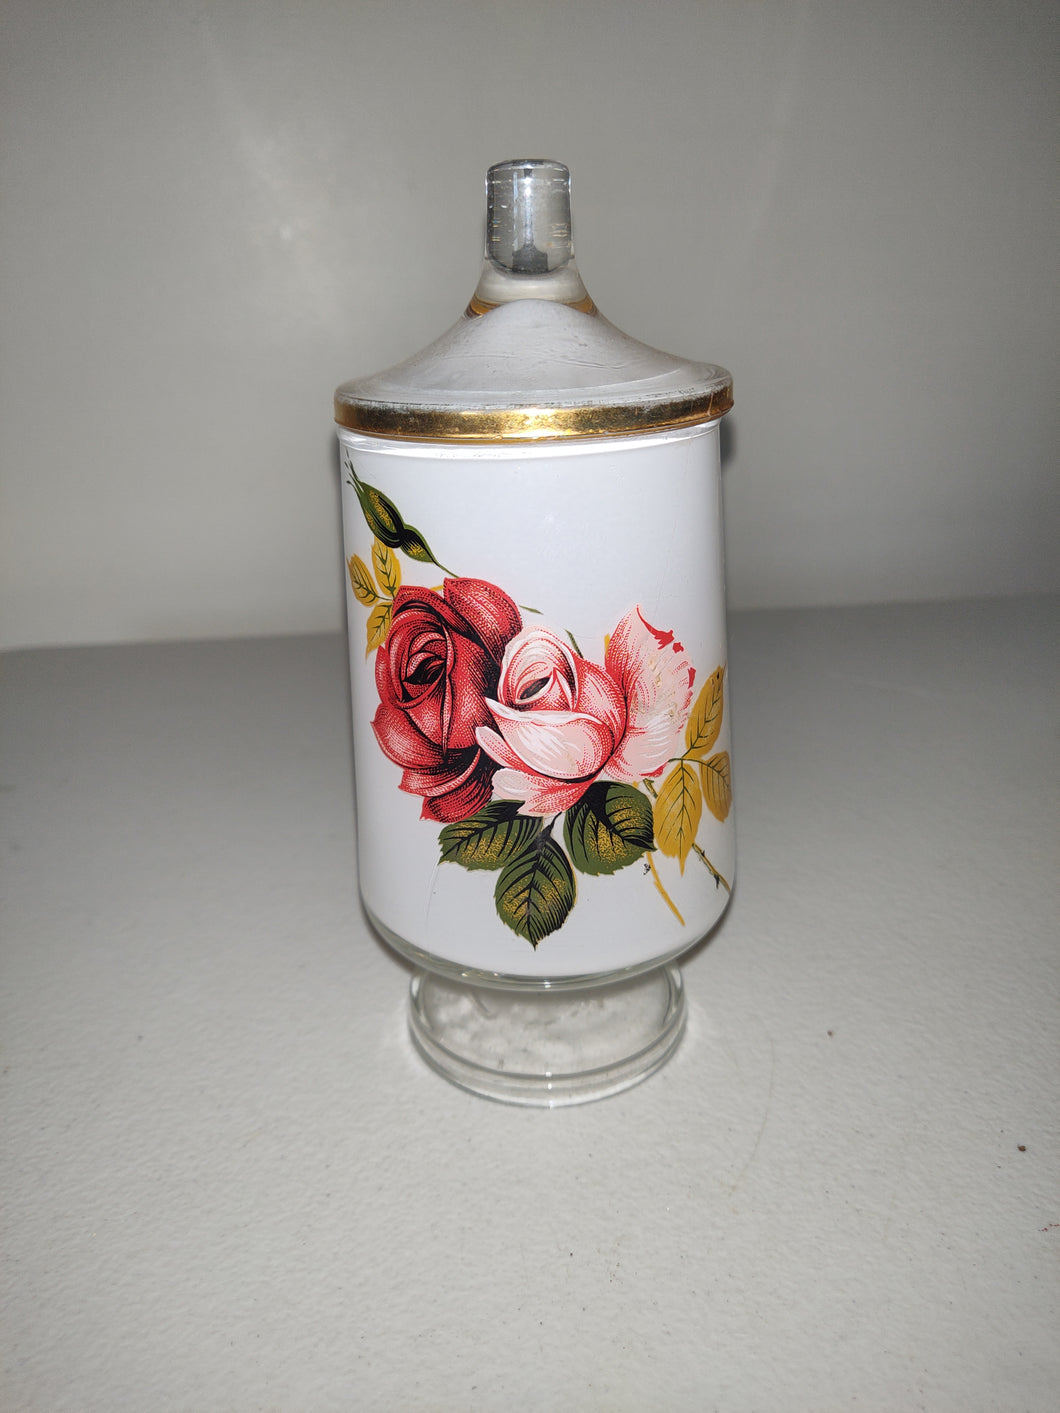 Vintage Apothecary Jar With Rose Motif Gold Trim